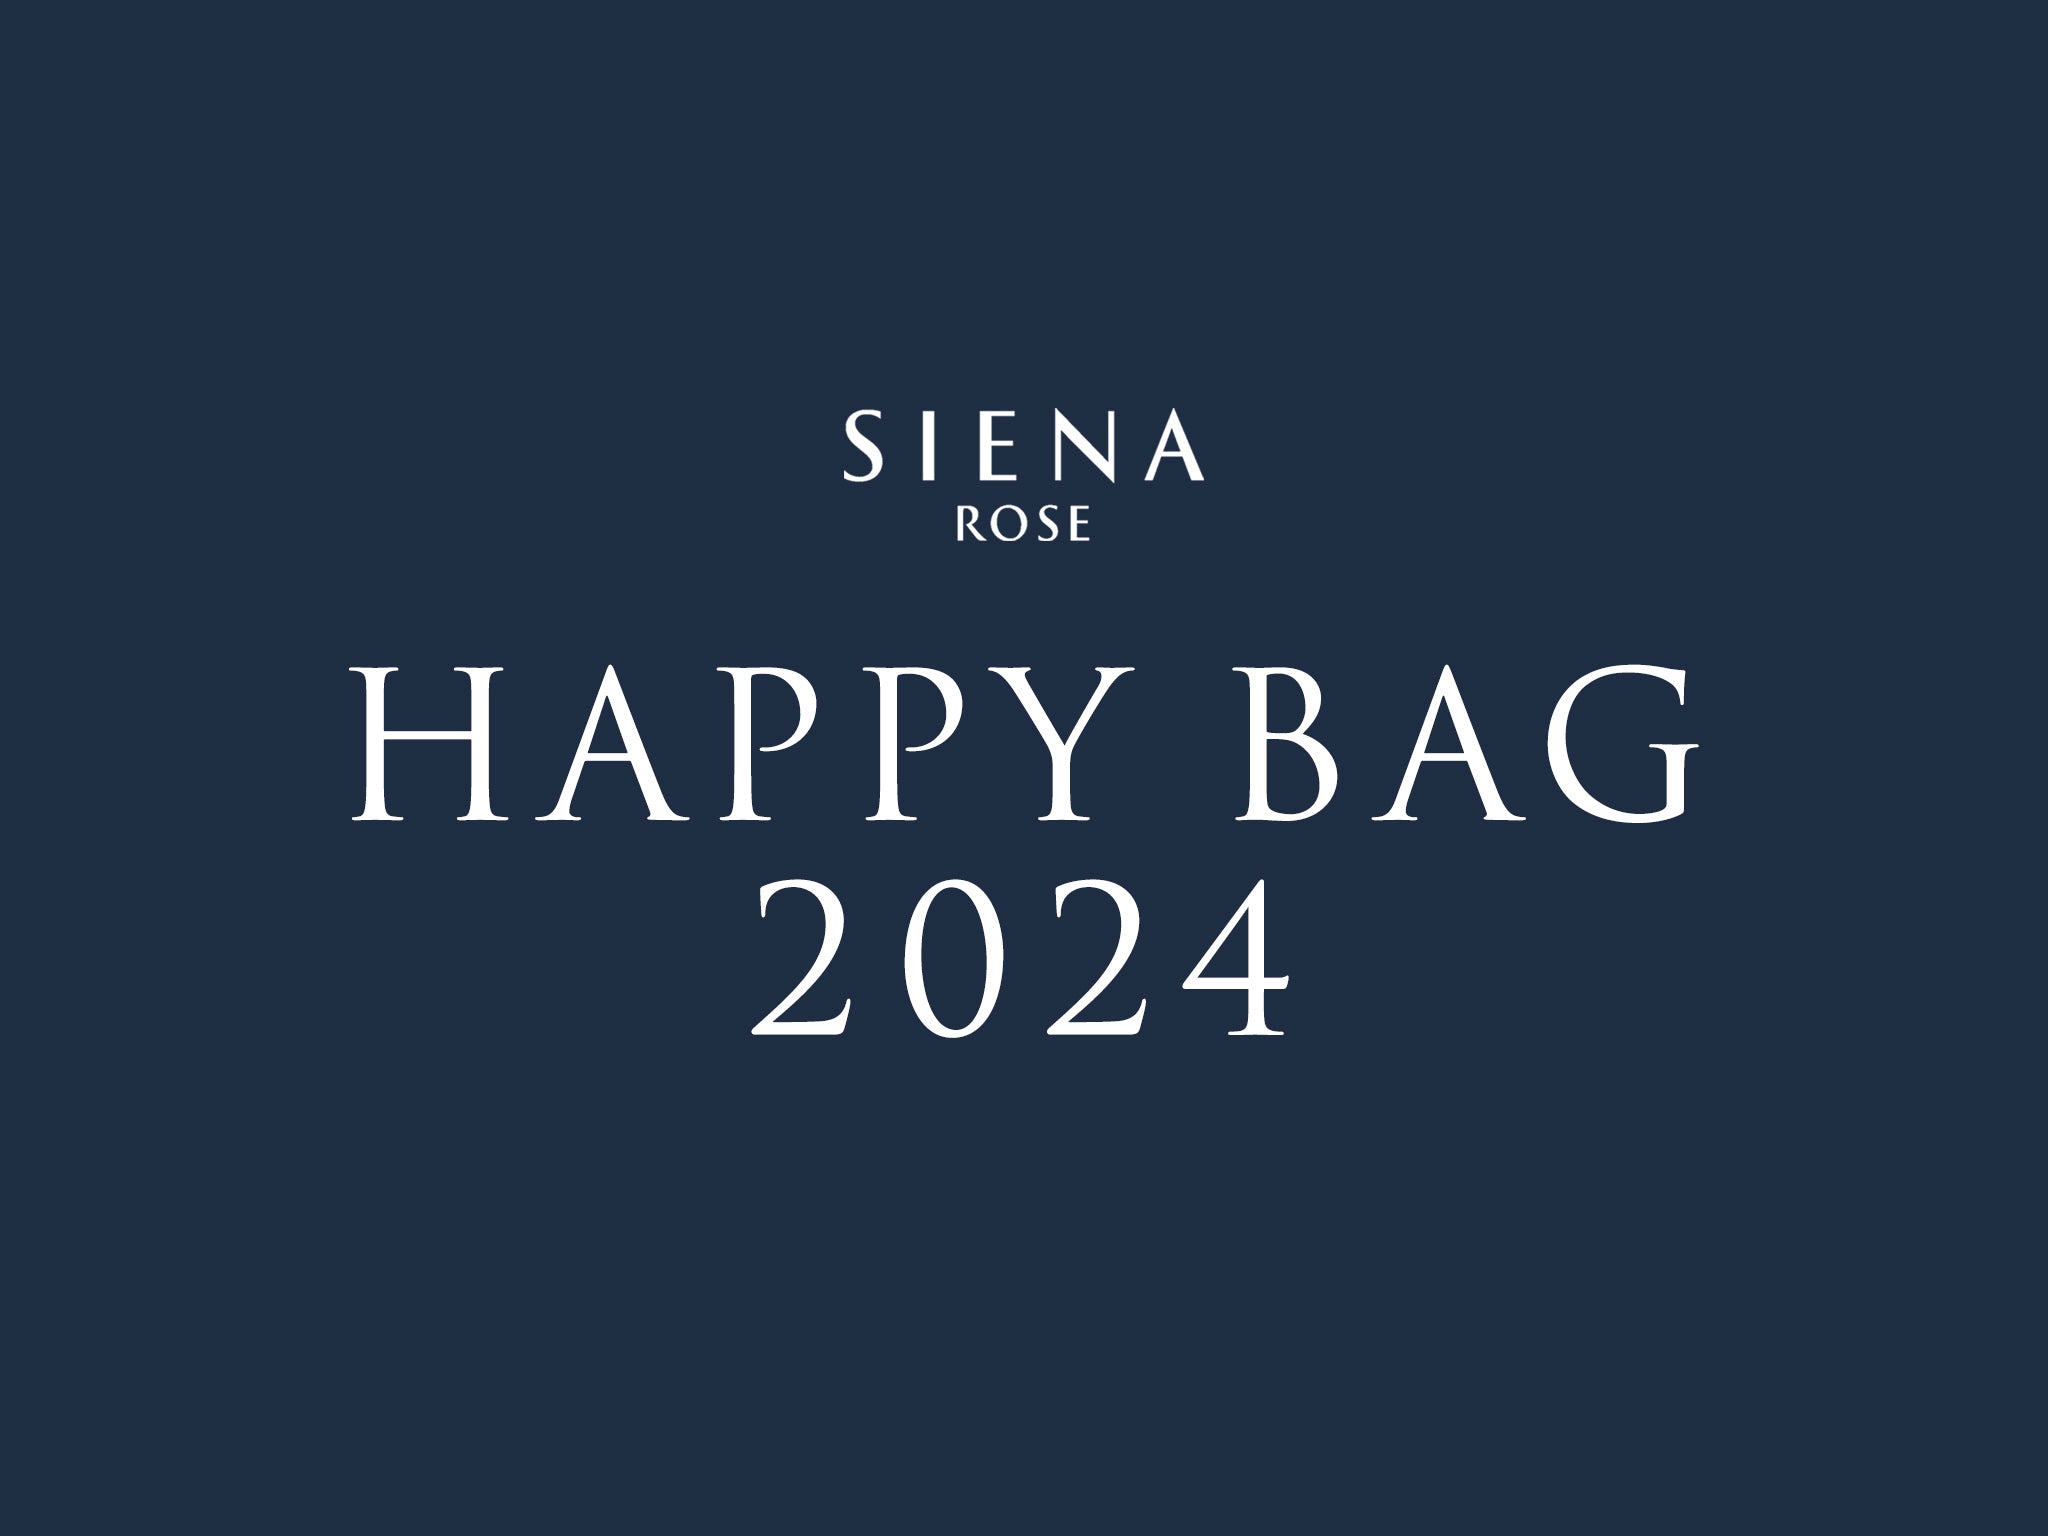 HAPPY BAG 2024》発売日のお知らせ – SIENA ROSE